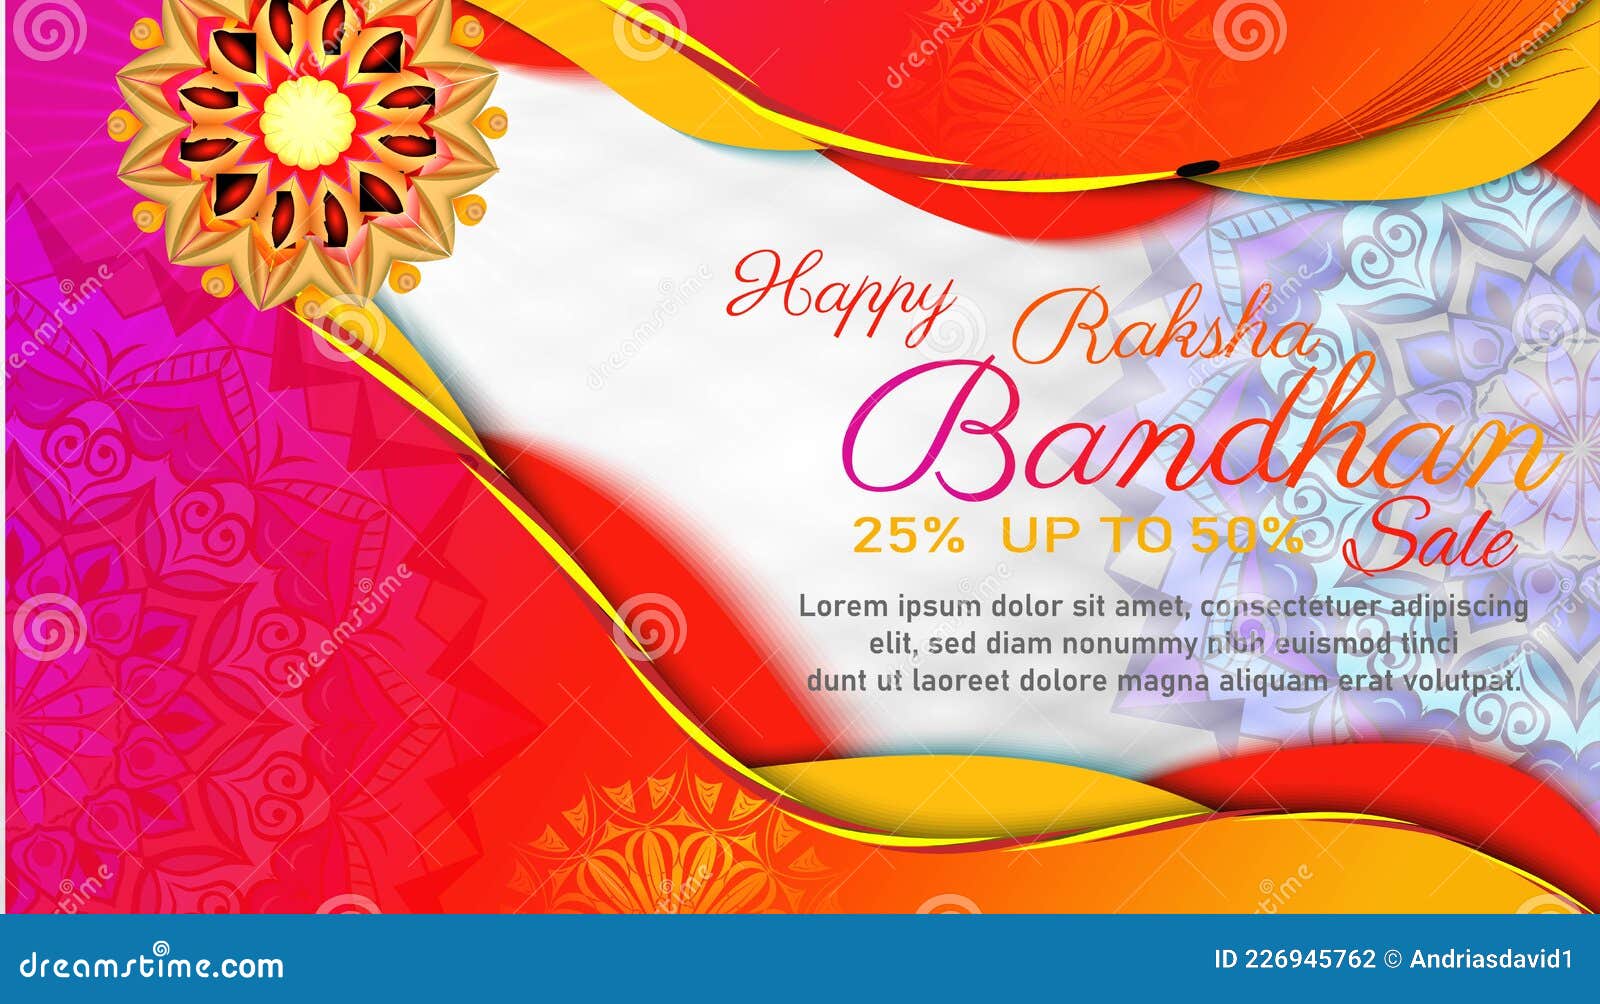 Rakhi Festival Sale Background Design with Rakhi Bandhan Illustration Stock  Vector - Illustration of creative, celebration: 226945762